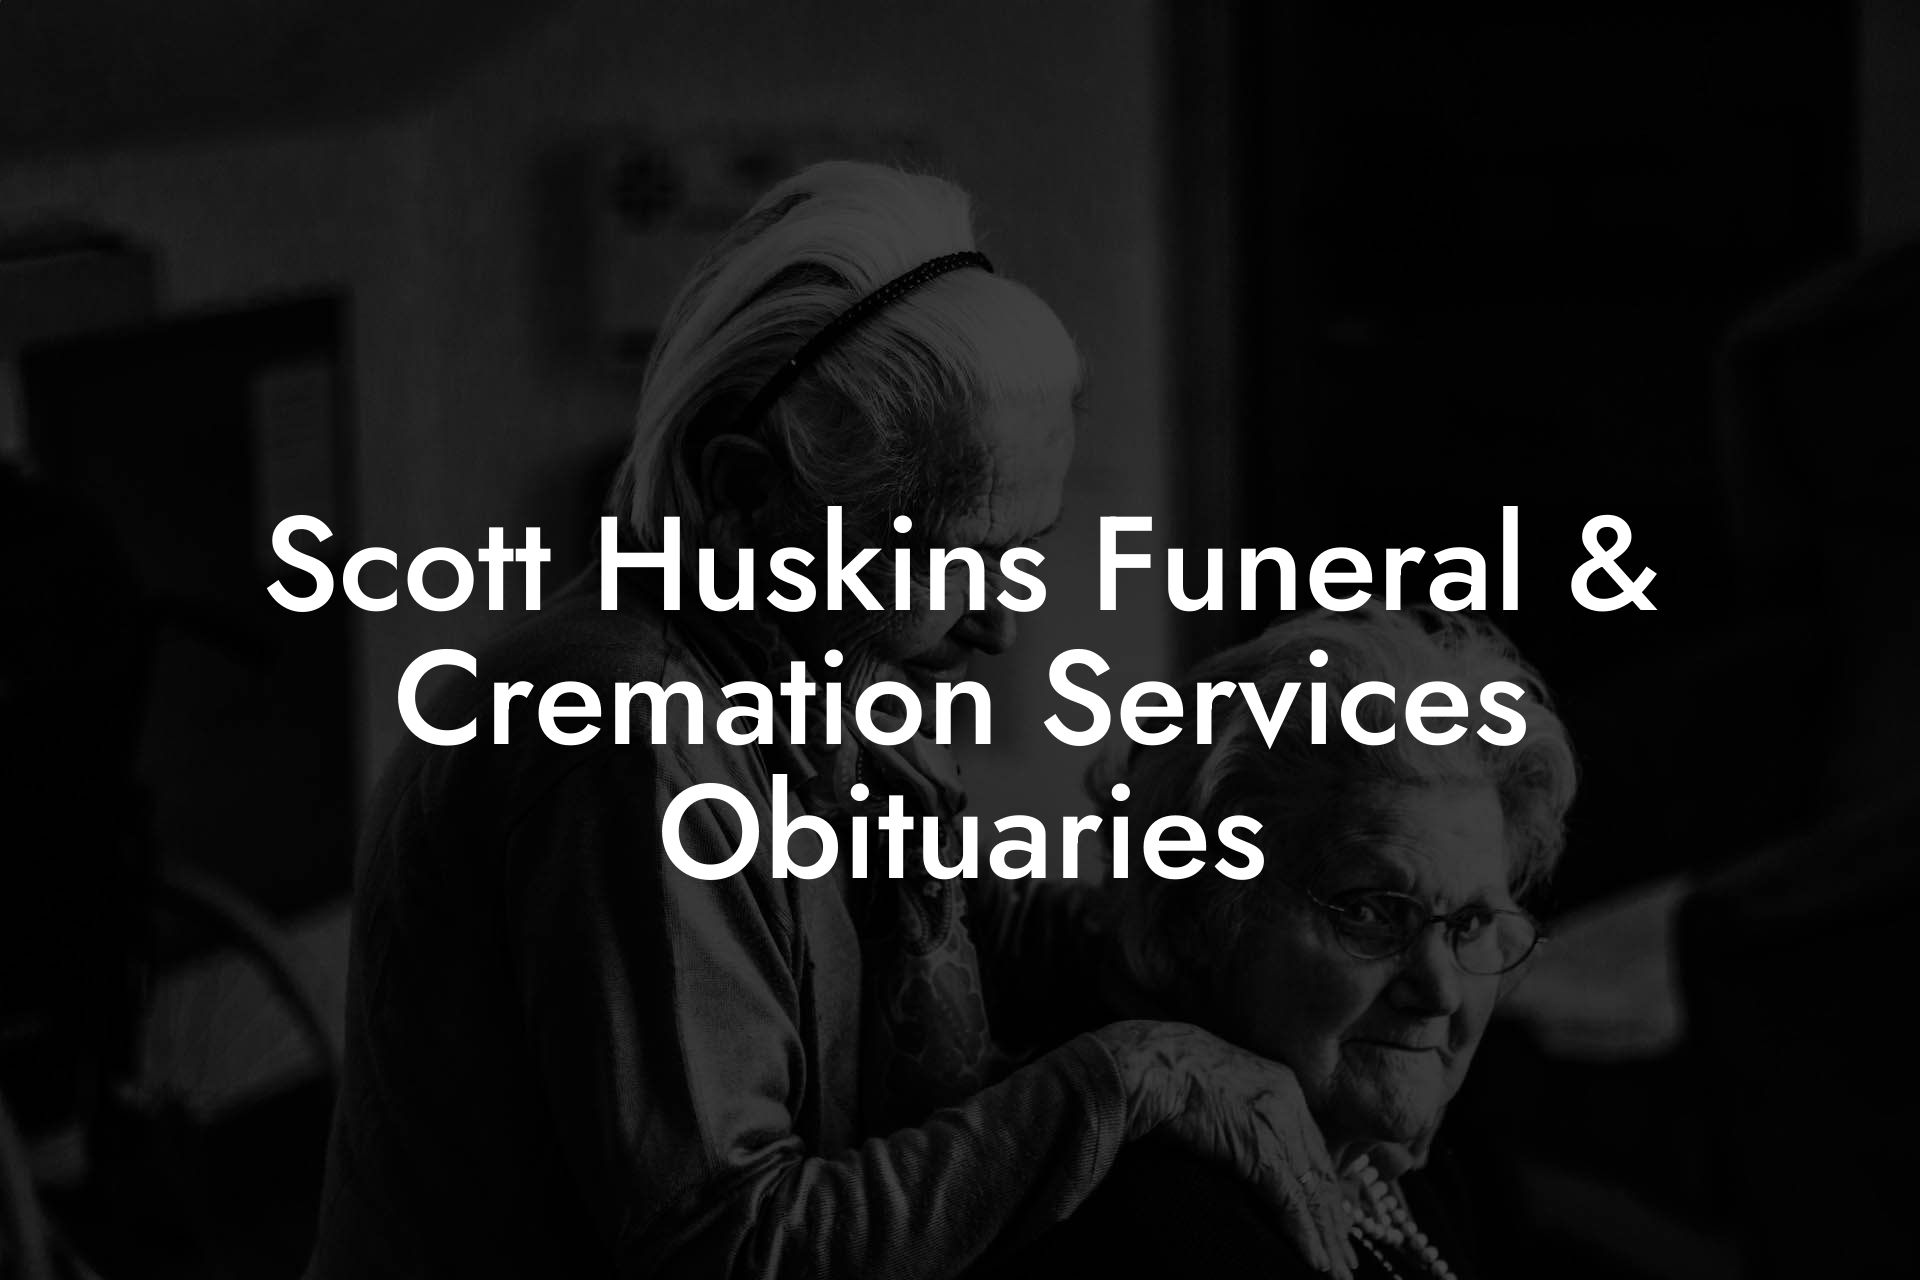 Scott Huskins Funeral & Cremation Services Obituaries